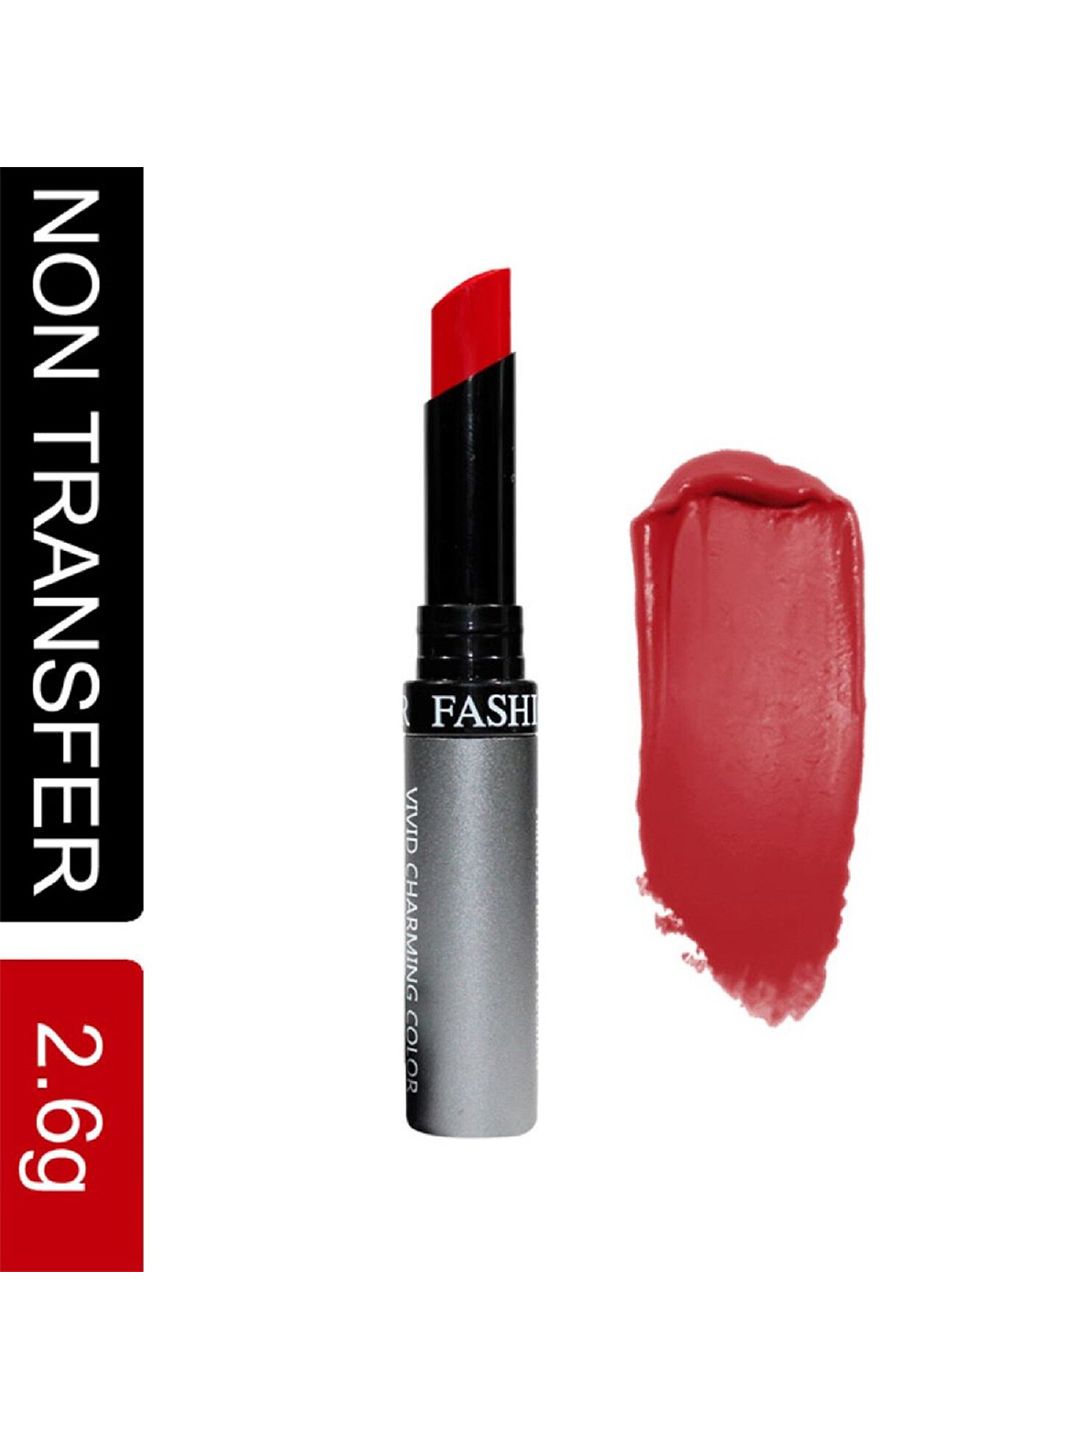 Fashion Colour Kiss Lip Vivid Charming Color No Transfer Lipstick - Agate Red 58 Price in India